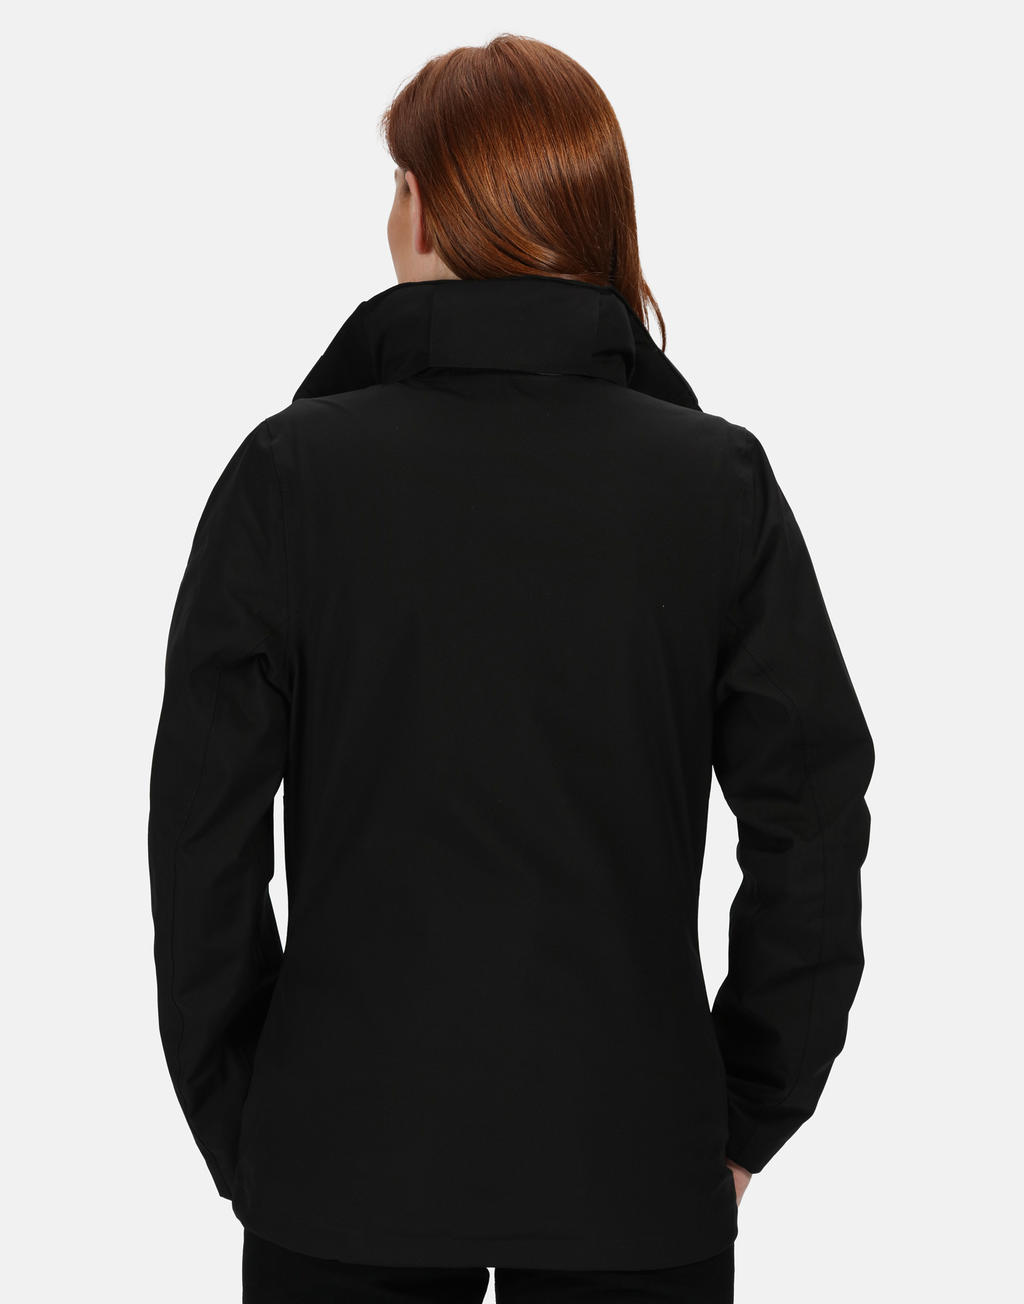  Womens Kingsley 3-in-1 Jacket in Farbe Black/Black